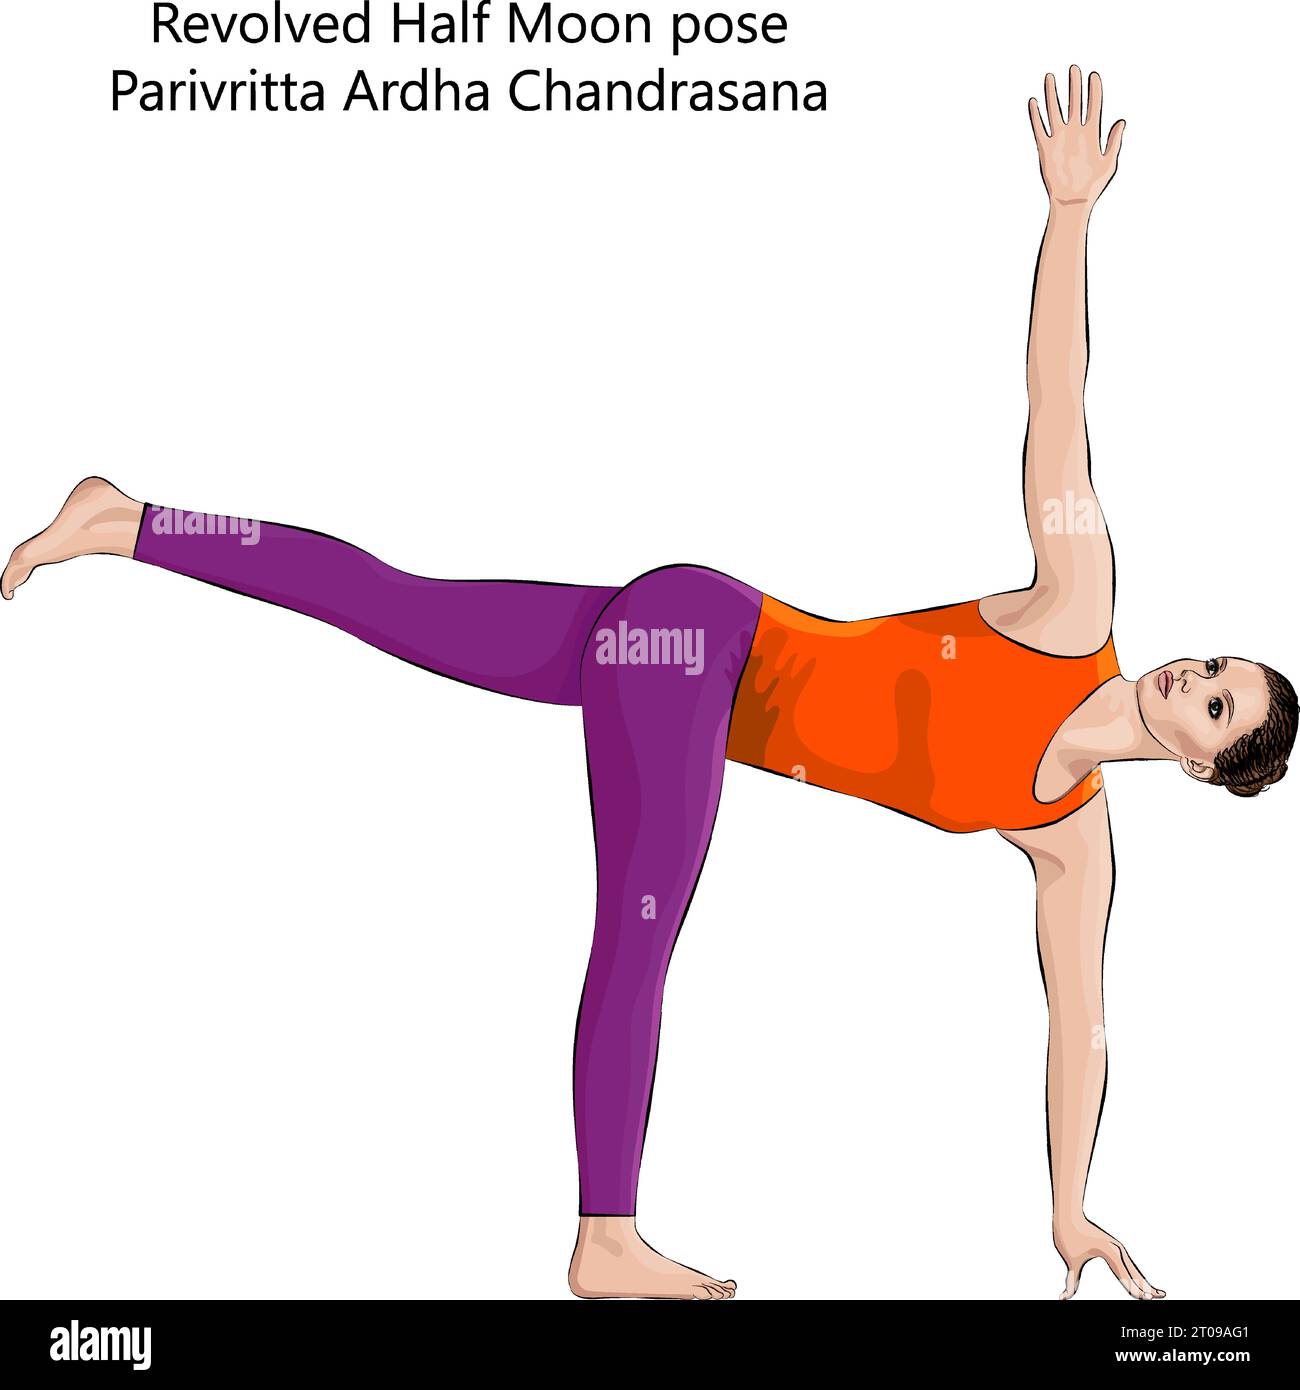 young woman doing yoga revolved half moon pose or parivritta ardha chandrasana intermediate difficulty isolated vector illustration 2T09AG1